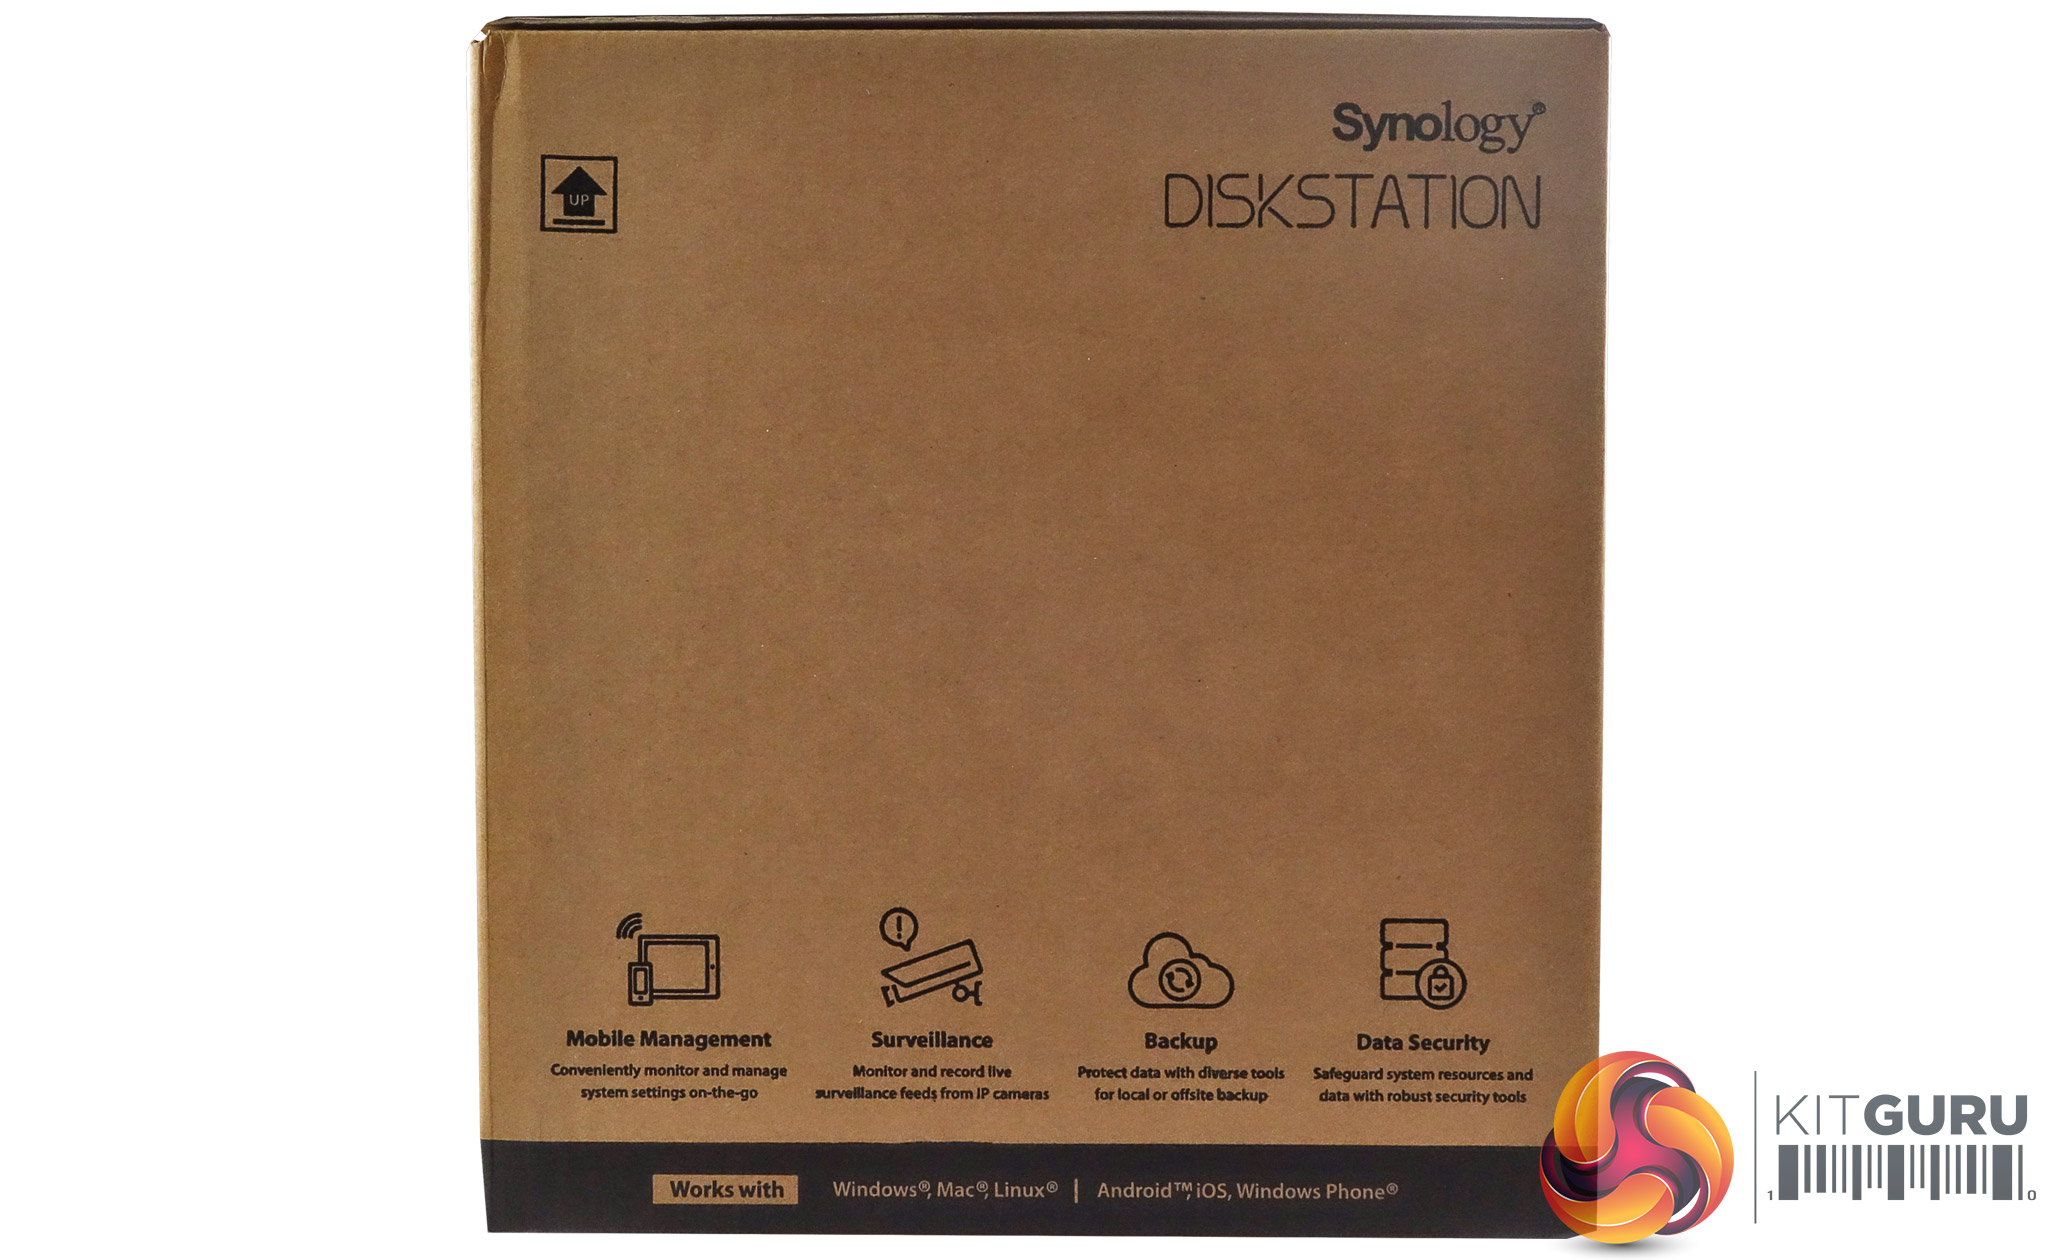 Synology DiskStation DS916+ 4-Bay NAS Review | KitGuru- Part 2